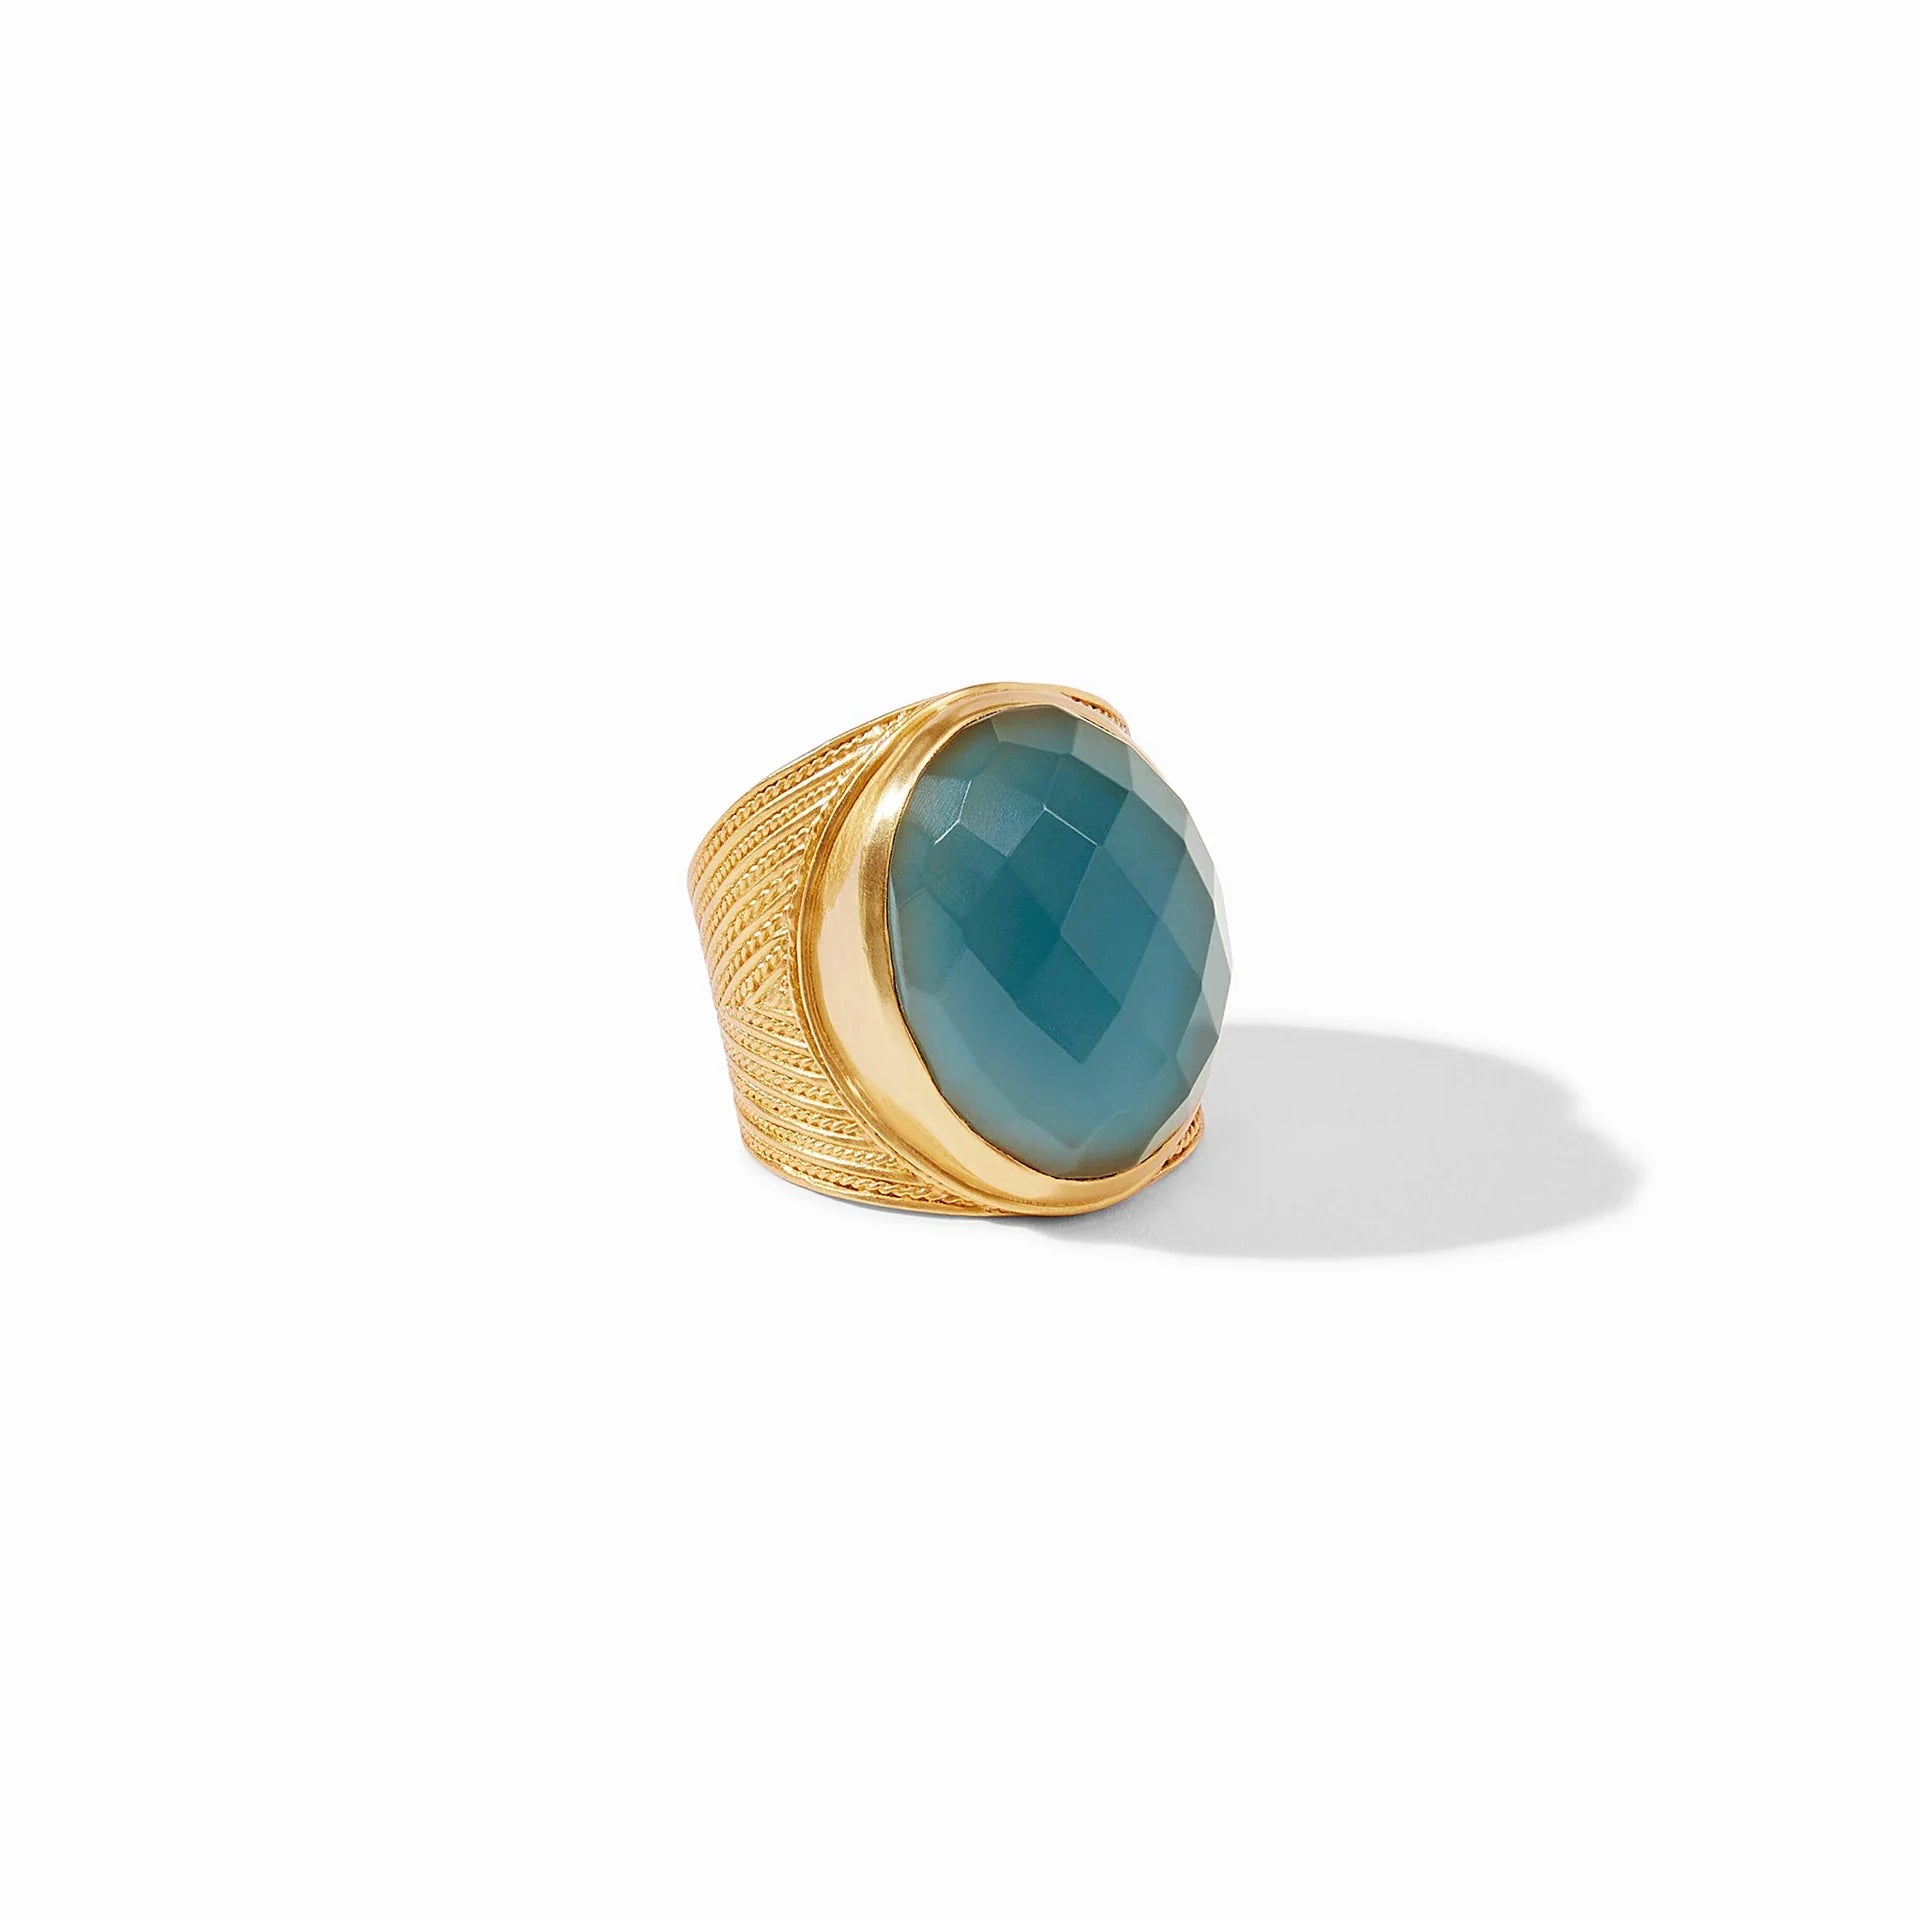 Julie Vos Verona Iridescent Peacock Blue Gold Statement Ring - Size 8